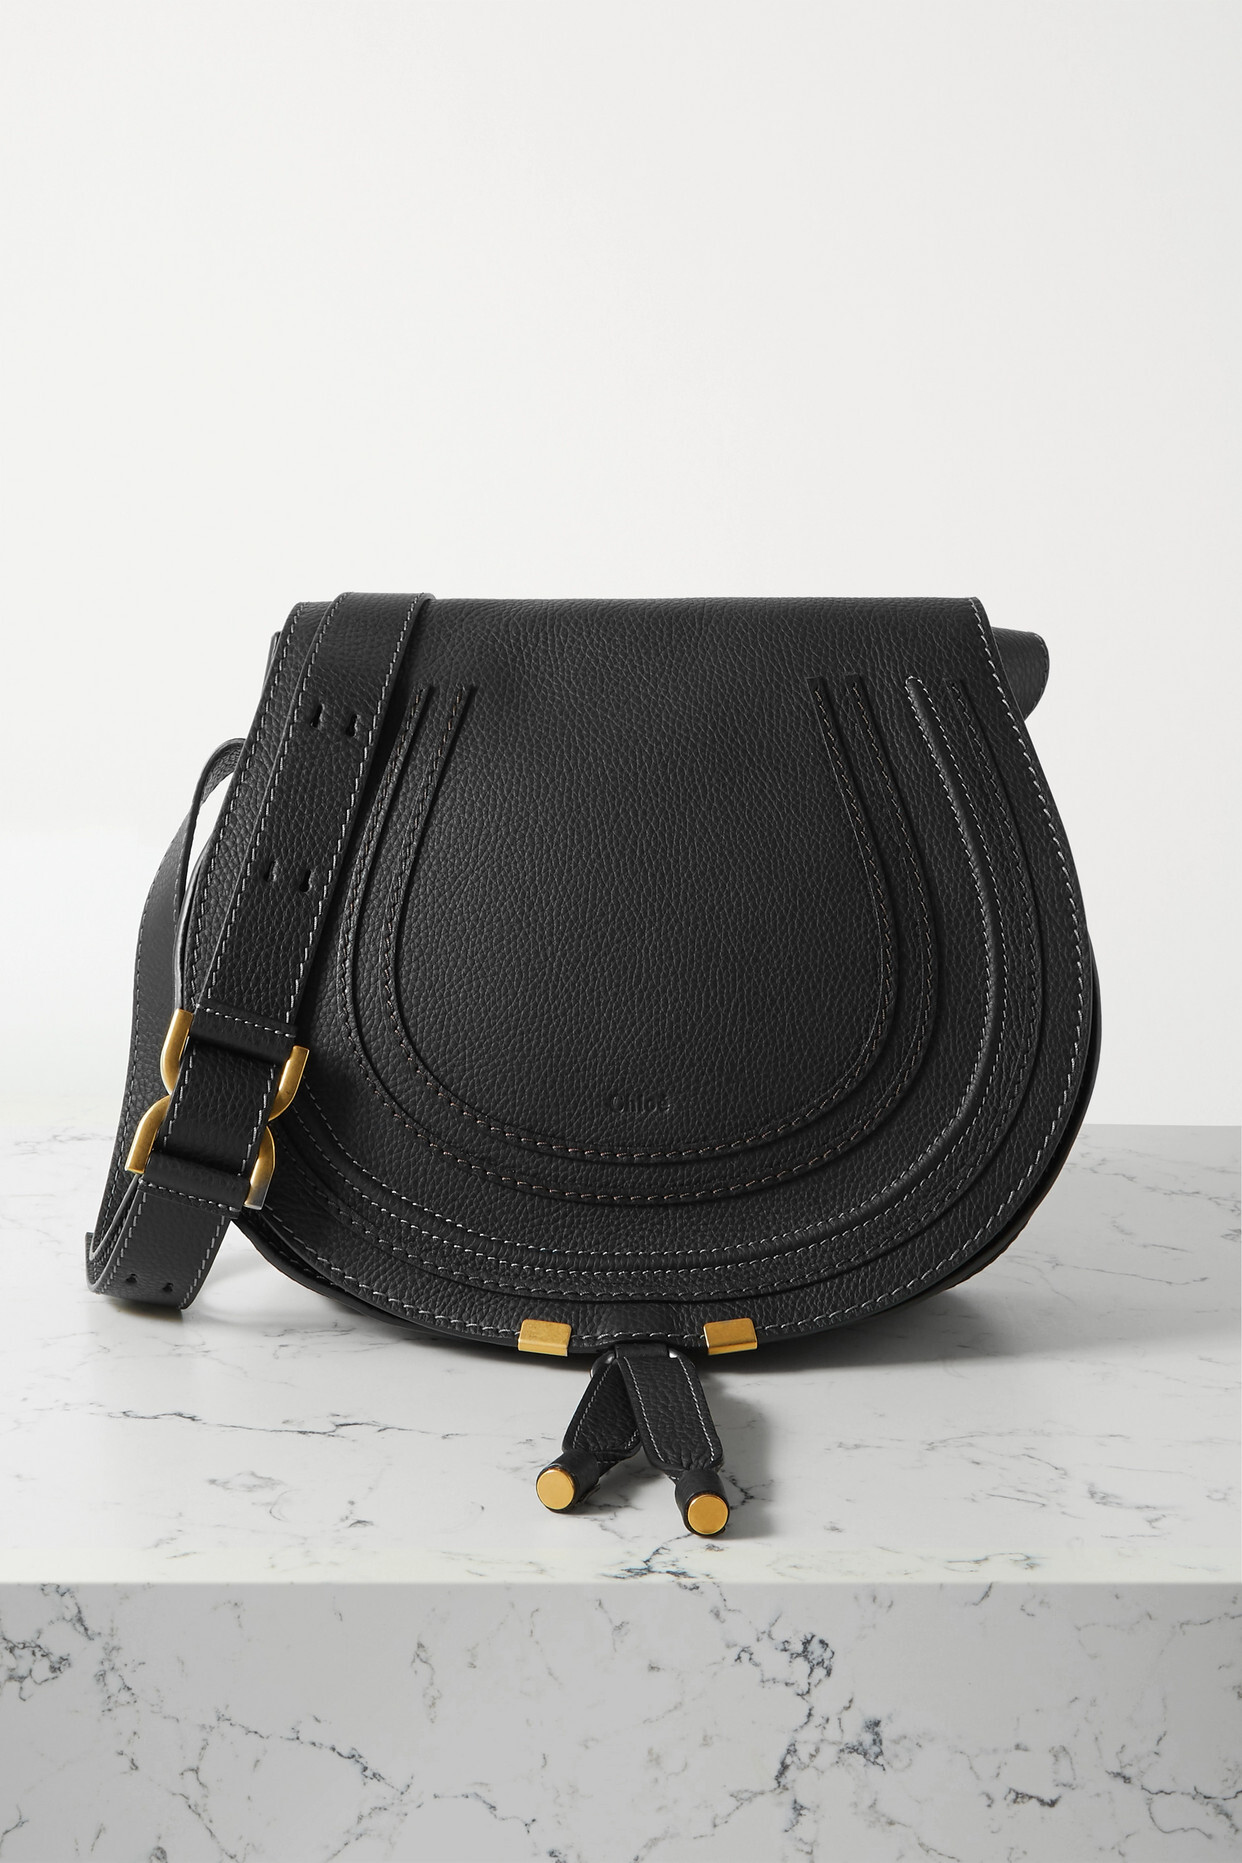 Chloé Chloé - Marcie Medium Textured-leather Shoulder Bag - Black